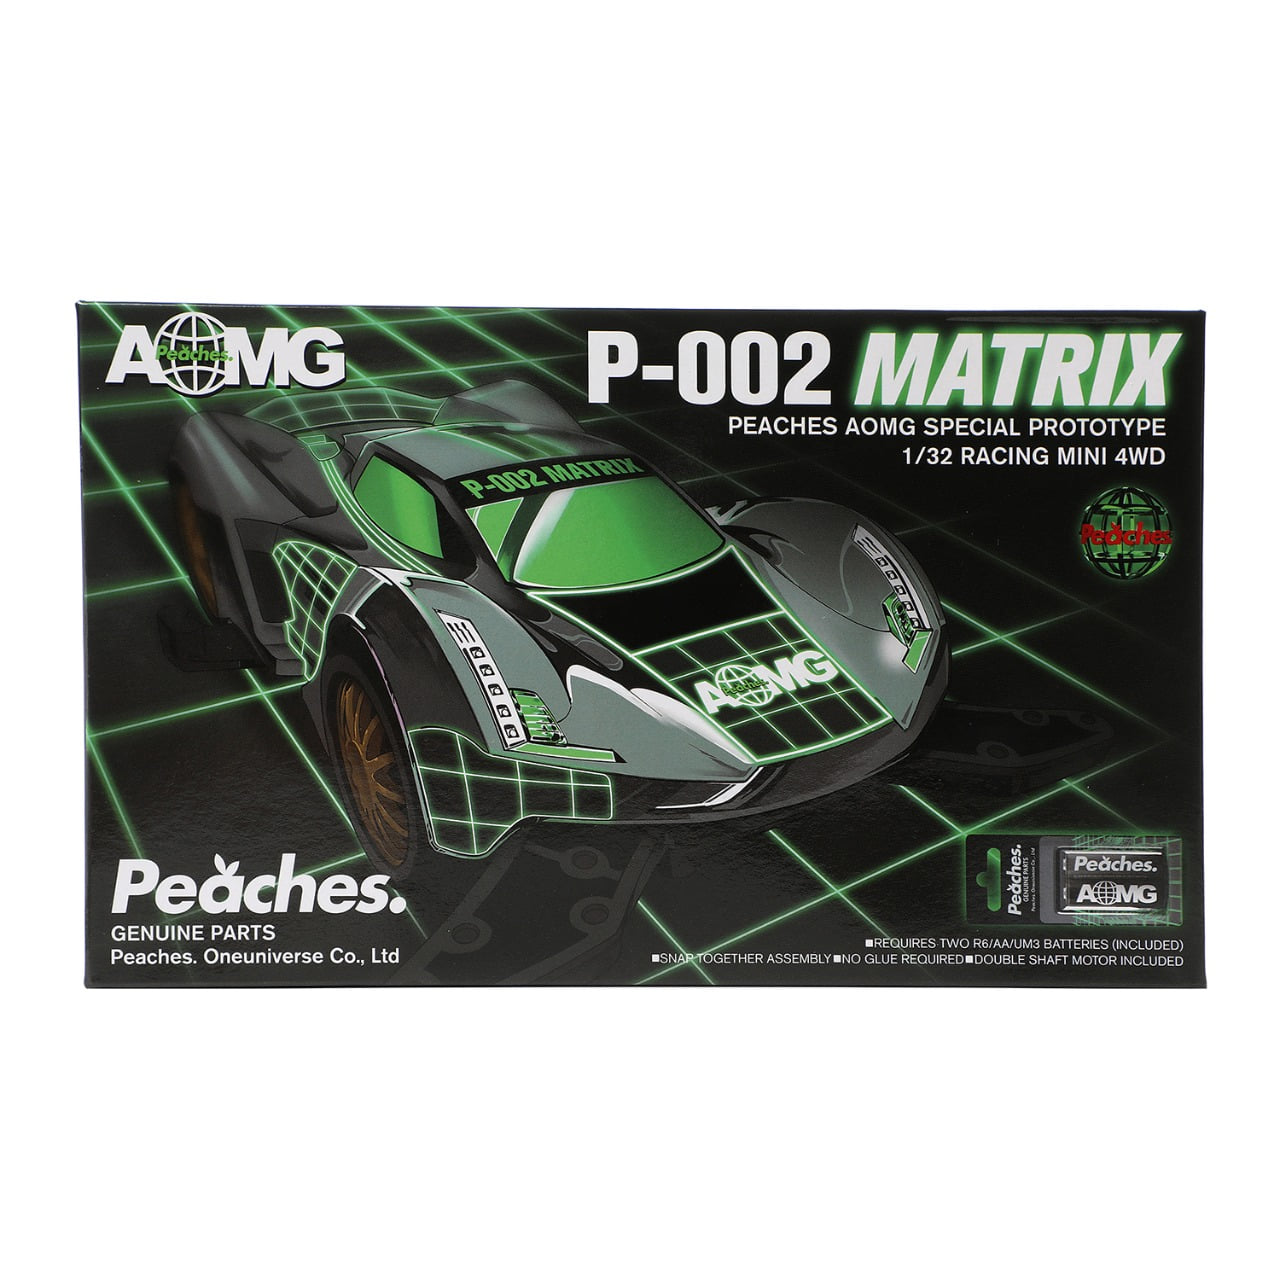 P-002 Matrix